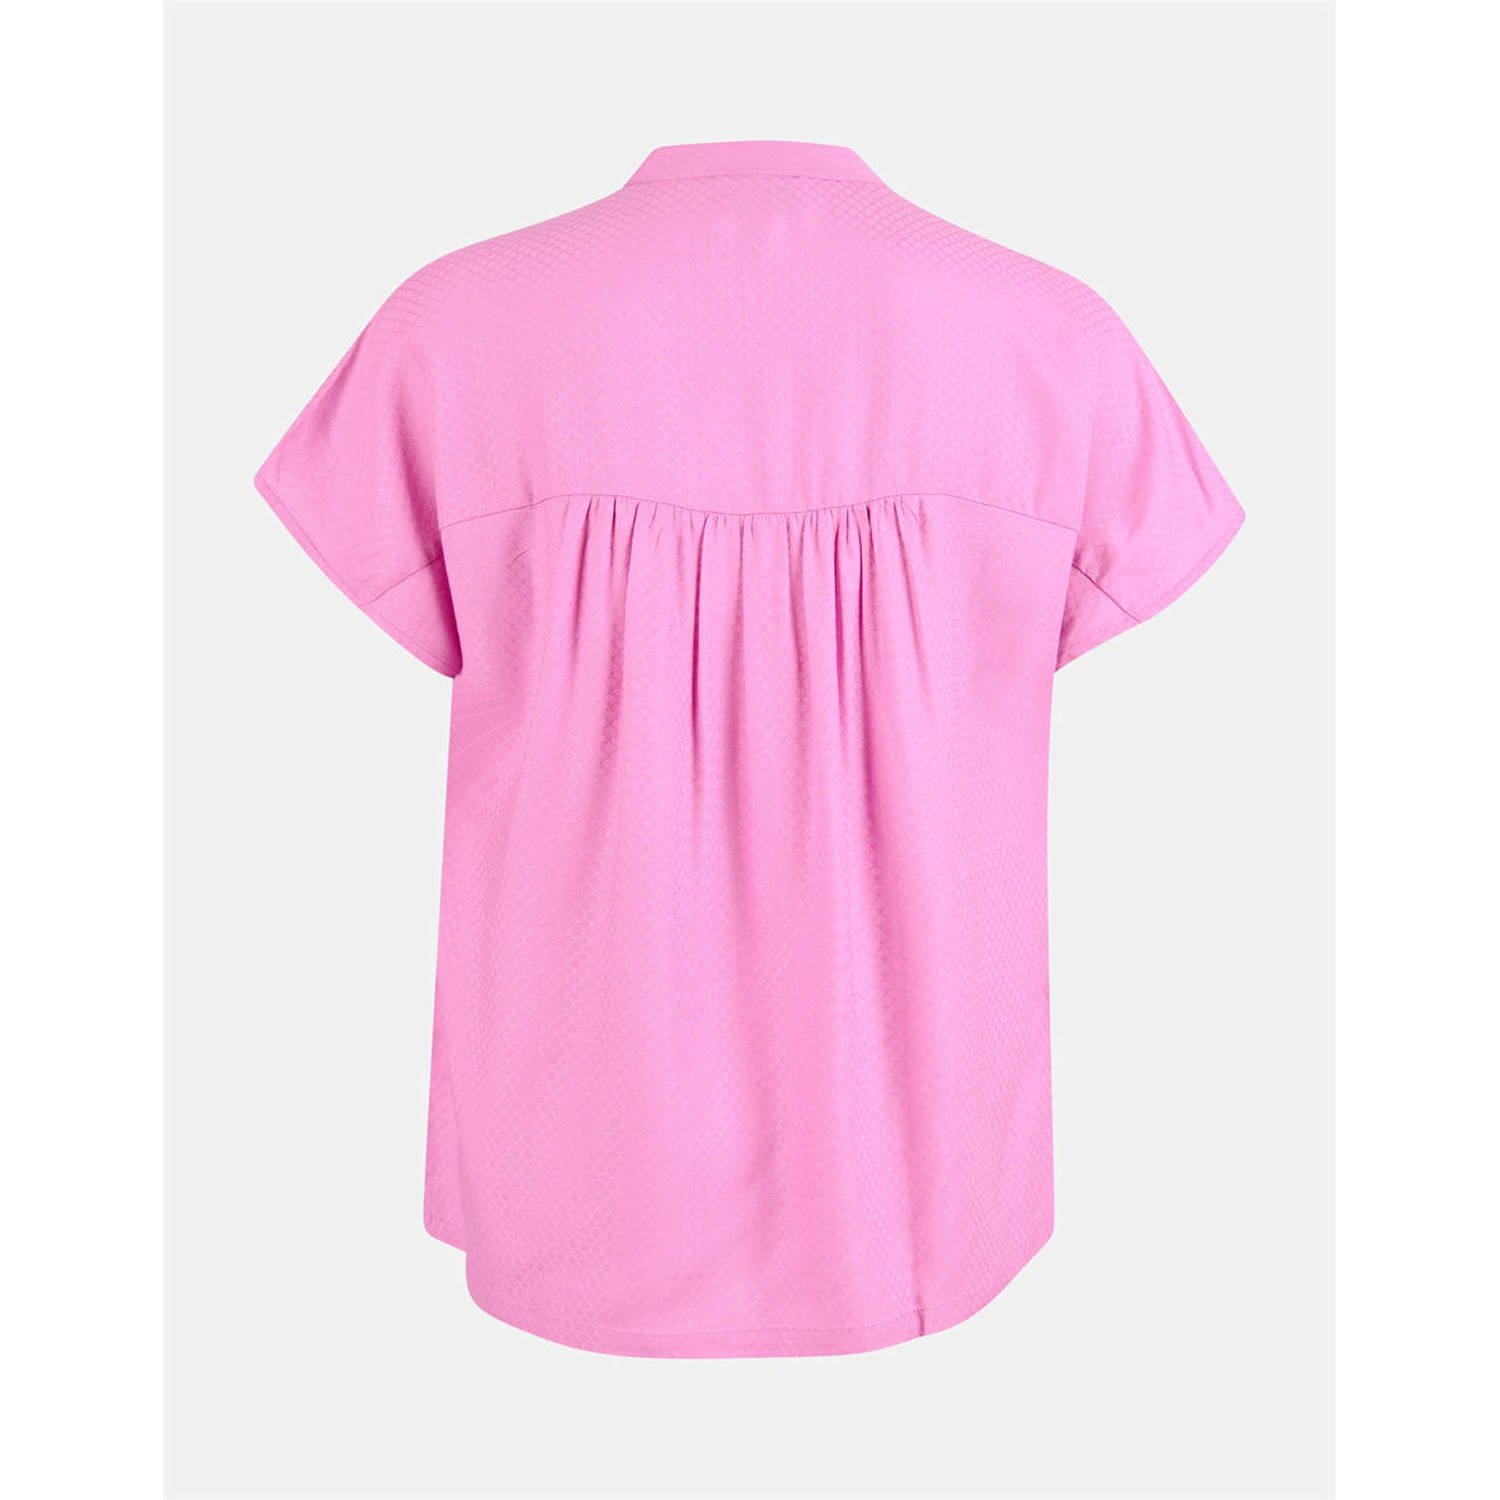 Shoeby blouse roze